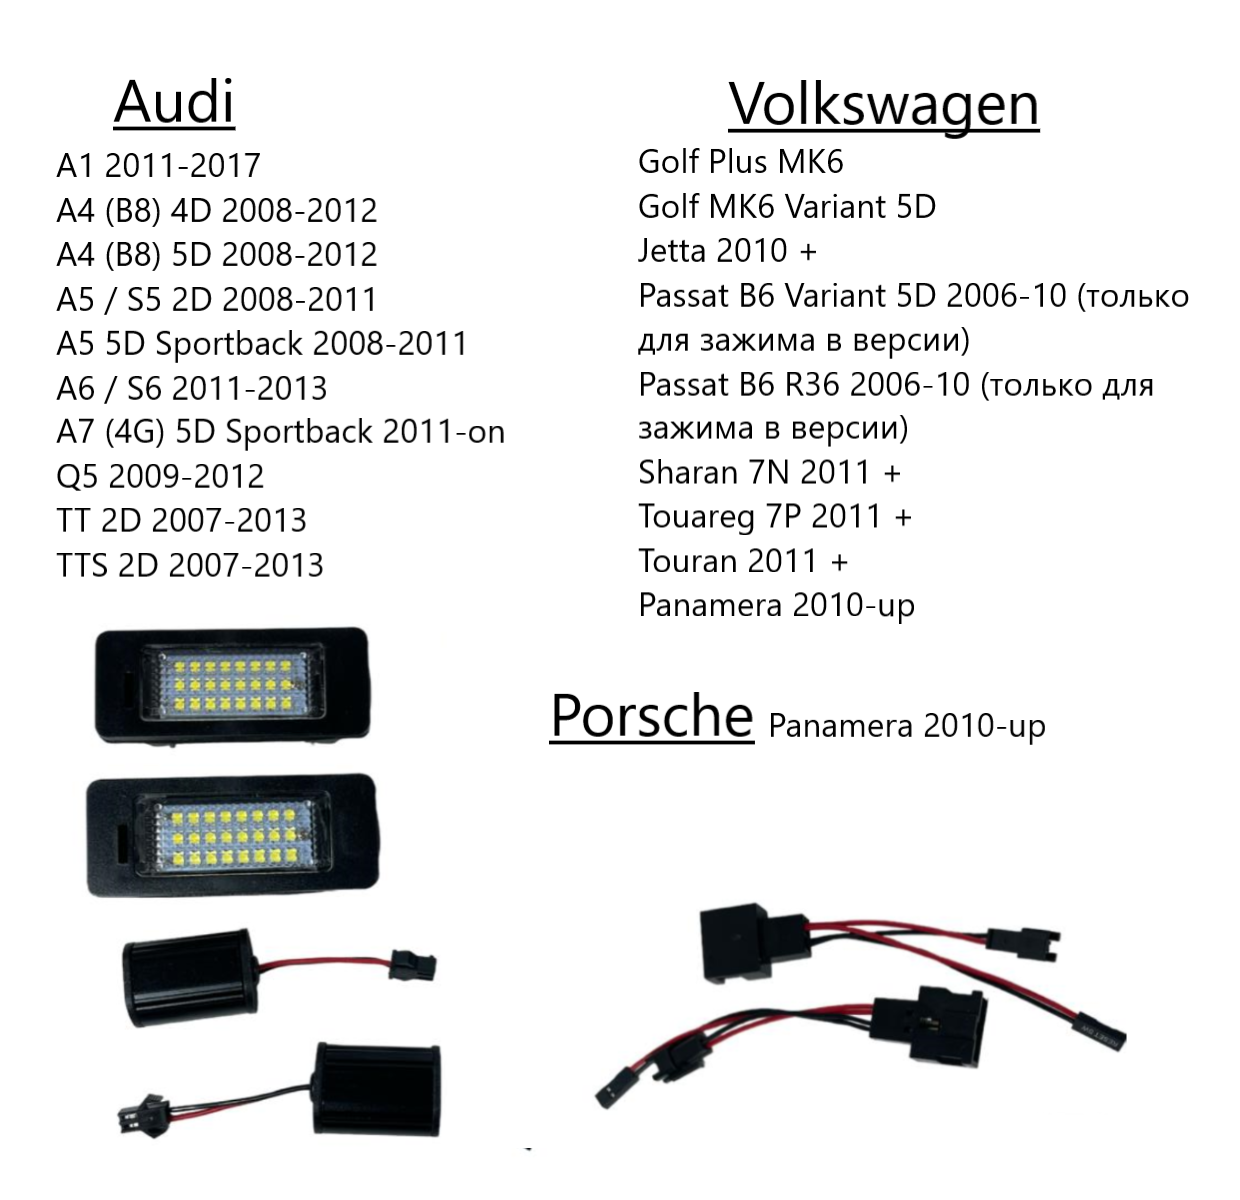 Светодиодная подсветка номера ABC для Audi A1 A4 A5 A6 A7 Q5 TT RS5 и VW Golf Jetta Passat Touareg Touran Porsche Panamera 2010-up